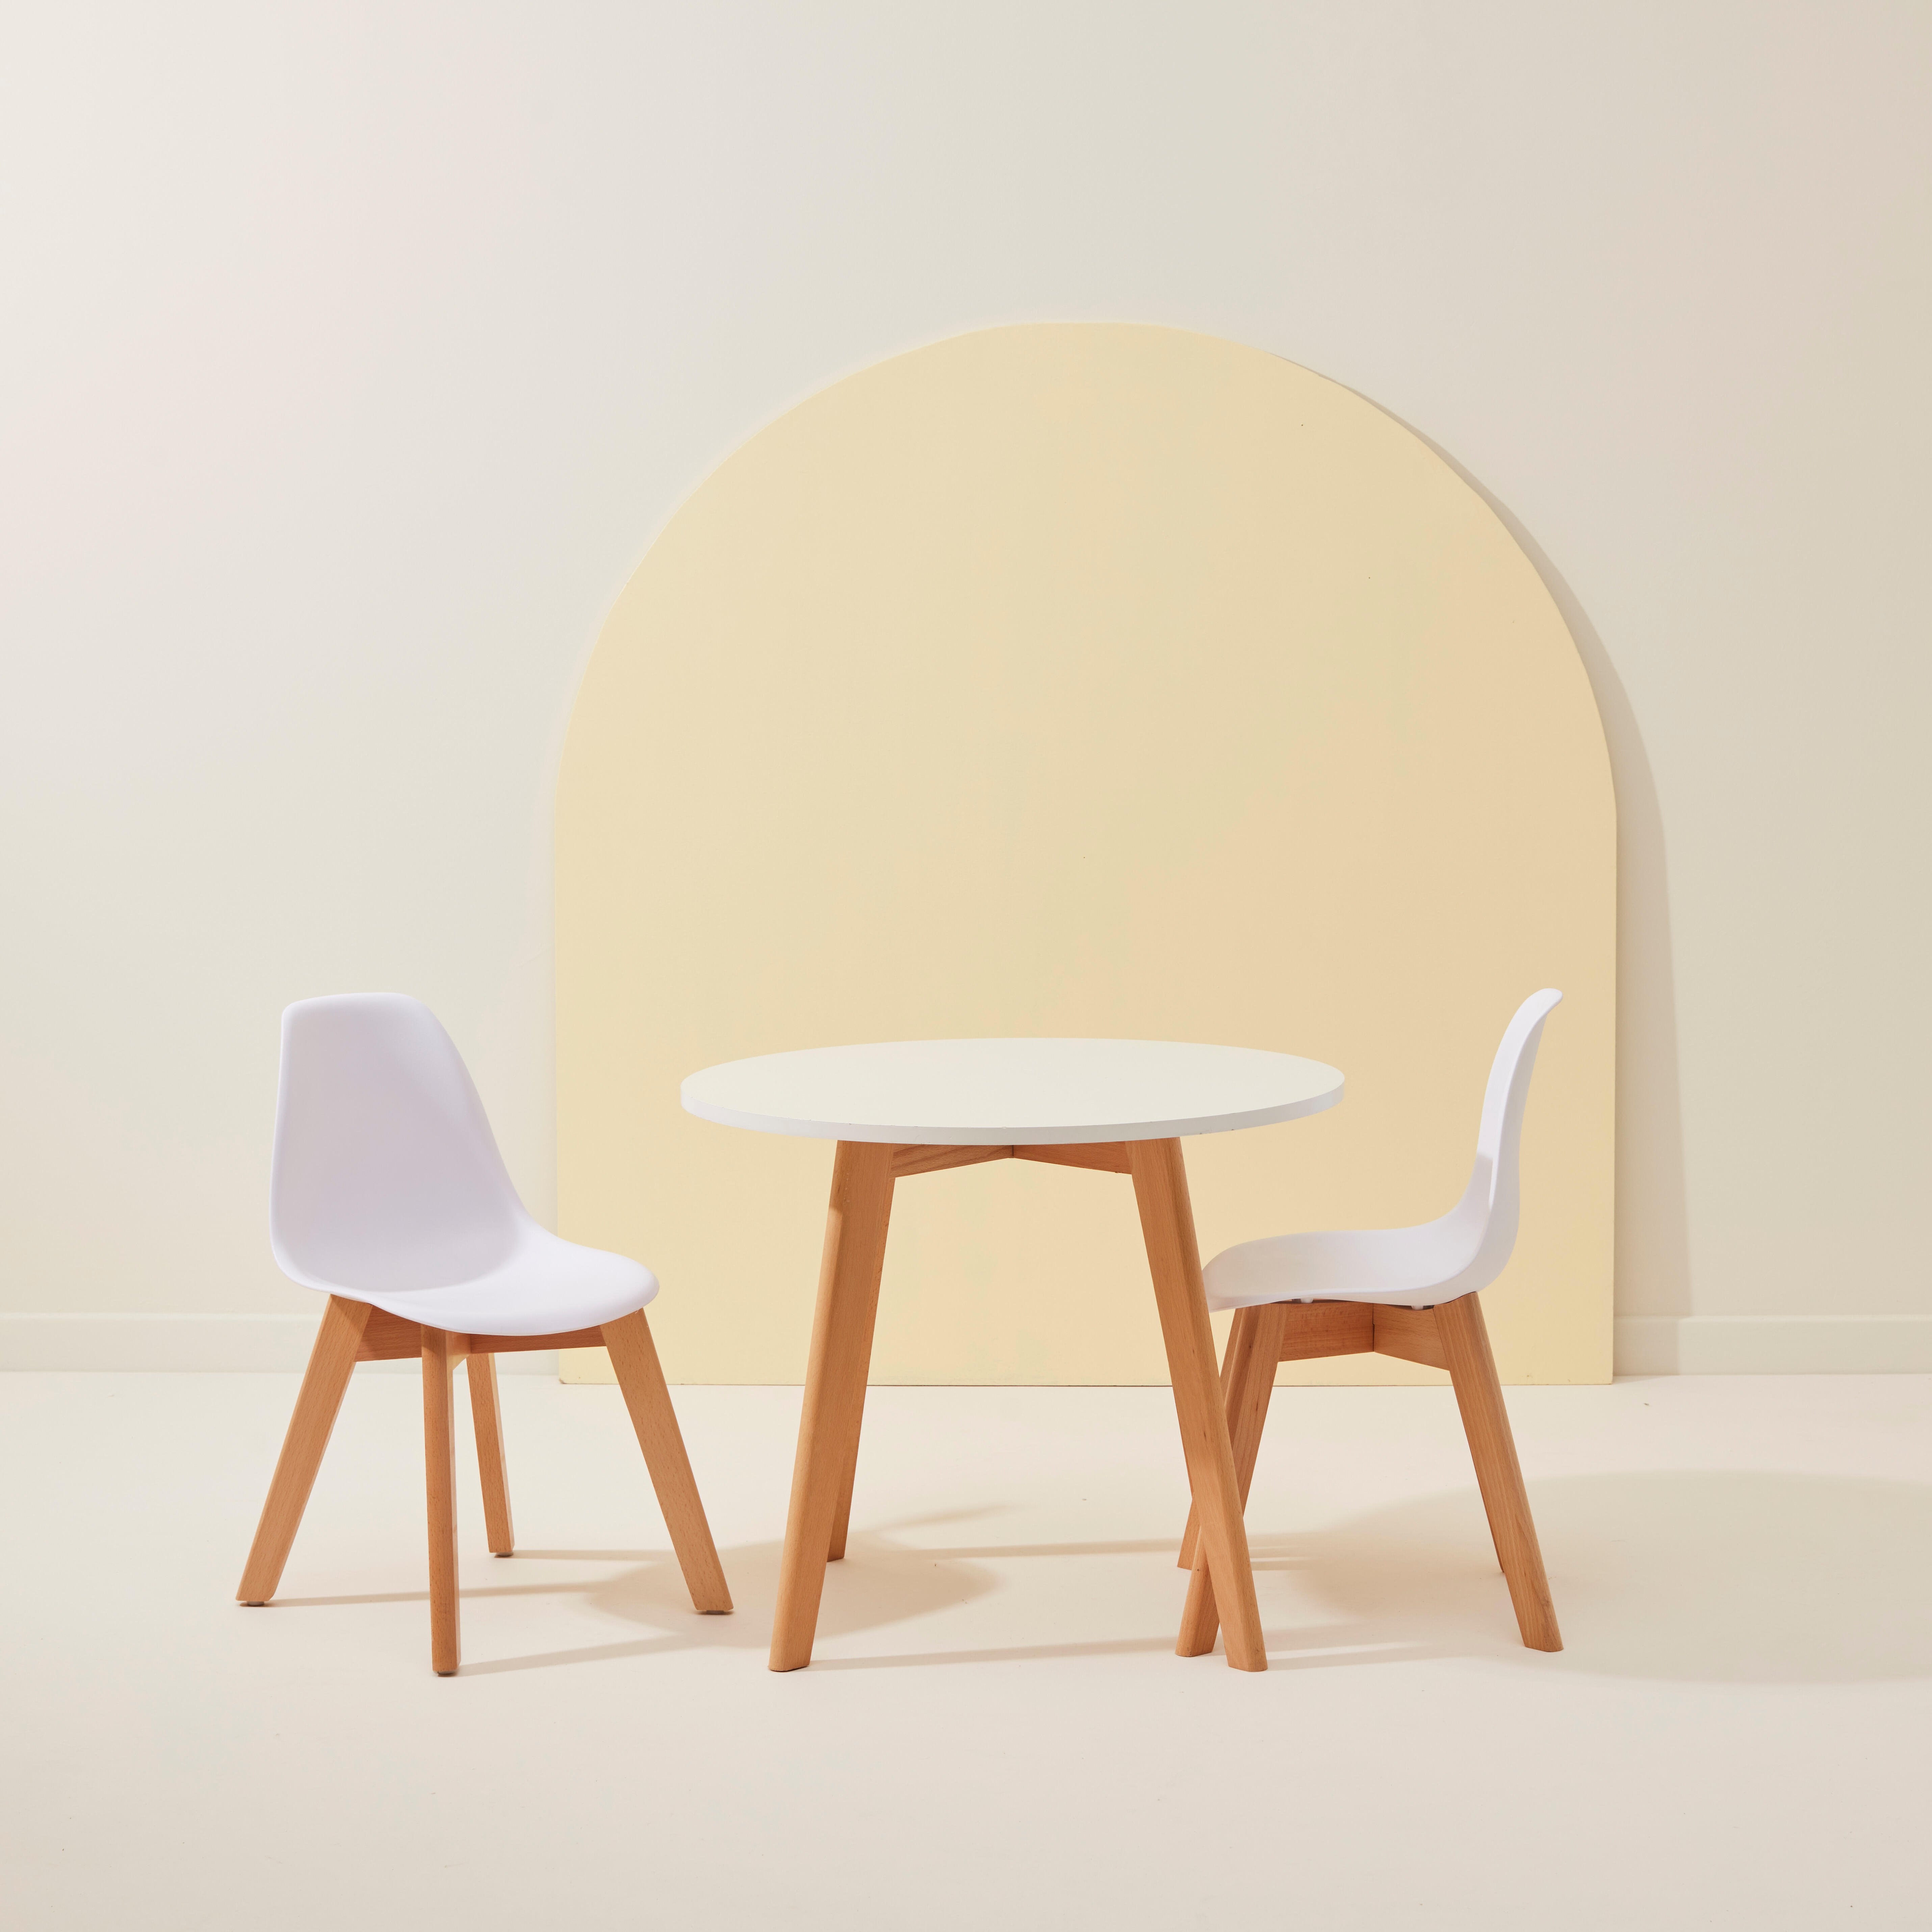 MATHIAS kindertafel met 2 stoelen naturel/wit H 49 cm - Ø 60 cm